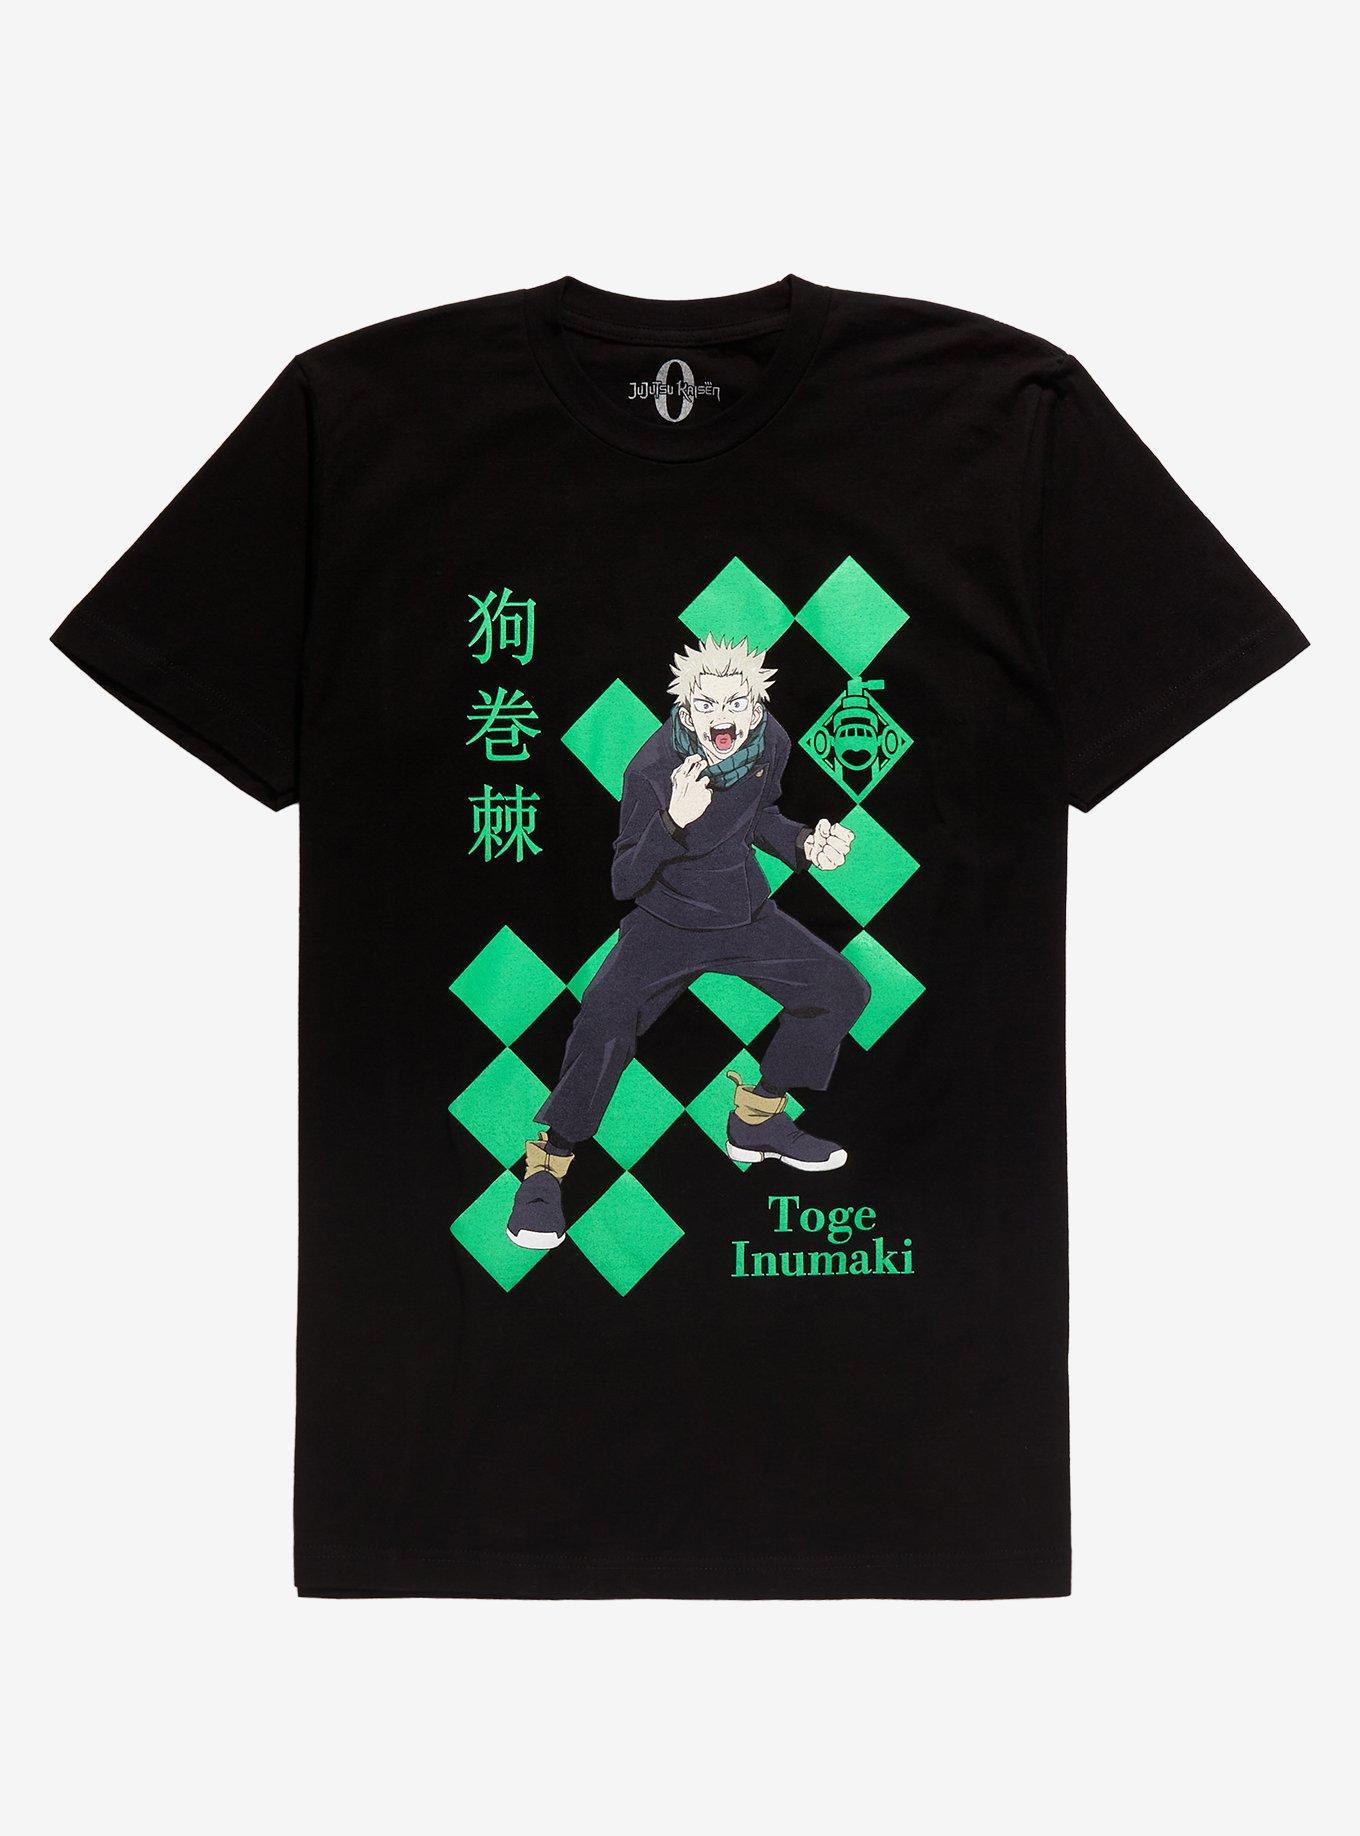 Toge Inumaki Jujutsu Kaisen Don't Move Urban Style Jjk Merch shirt - Trend  T Shirt Store Online